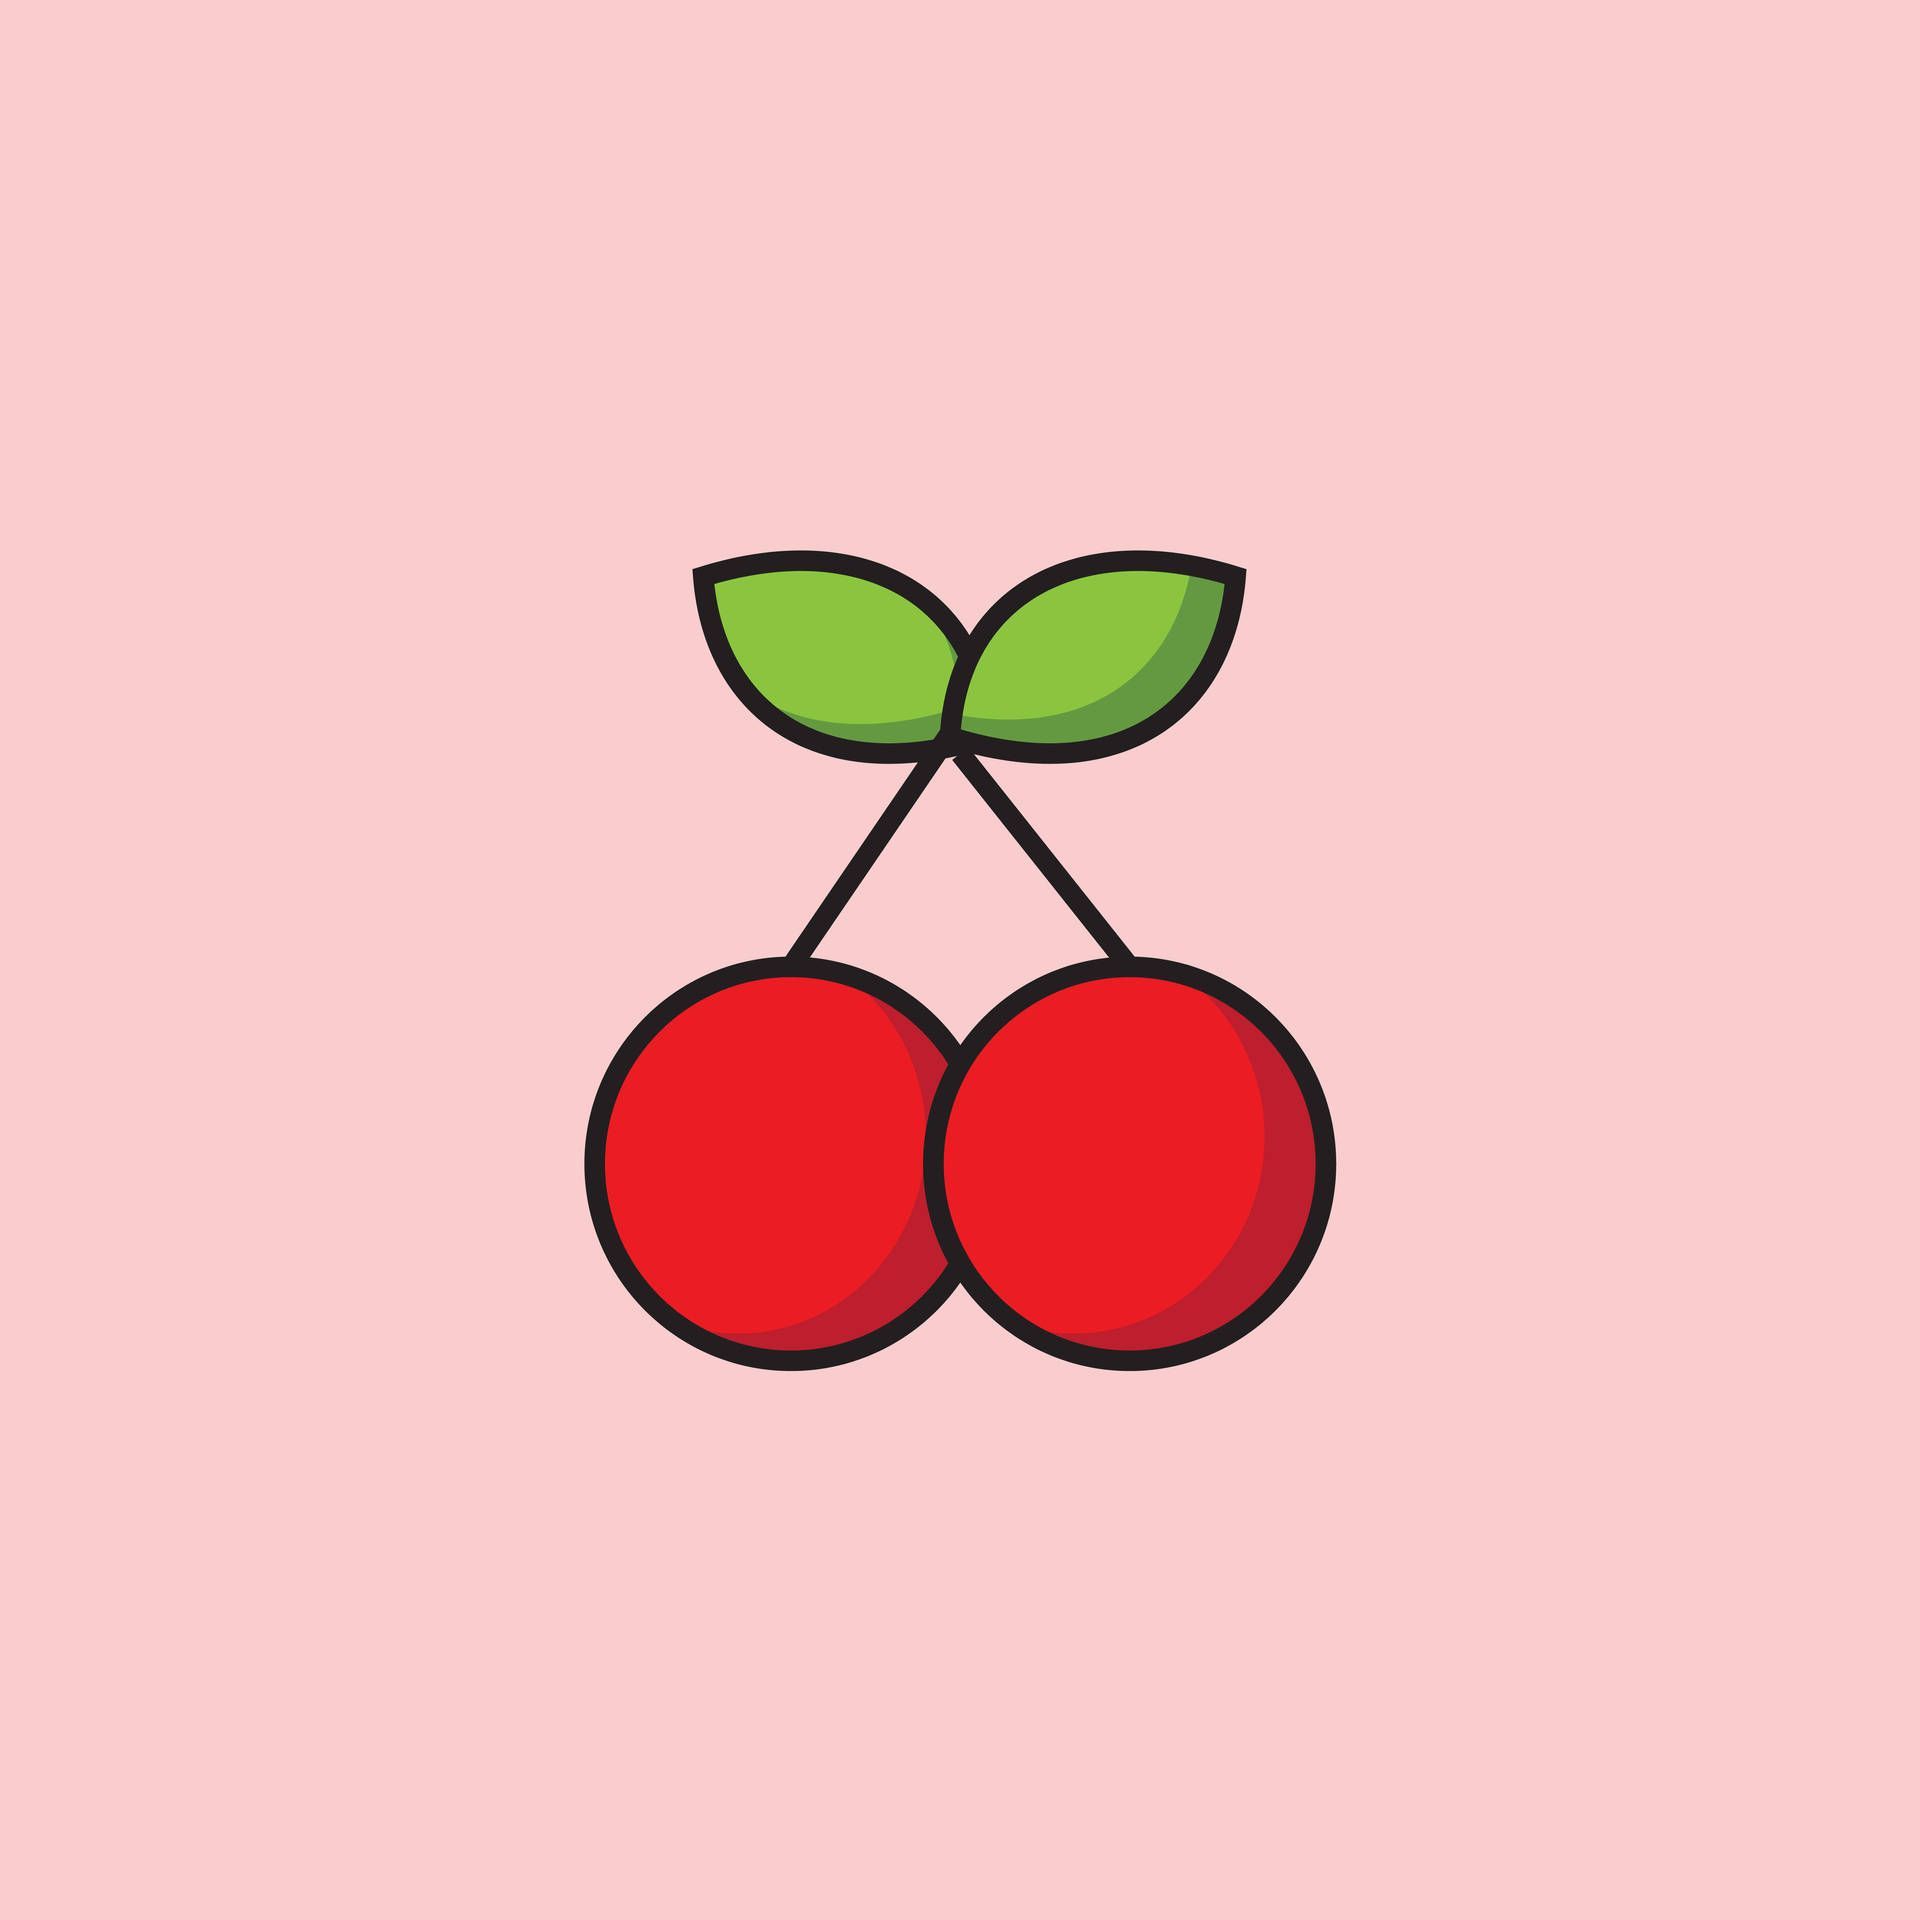 Download Cute Cherry Aesthetic 5833 X 5833 Wallpaper